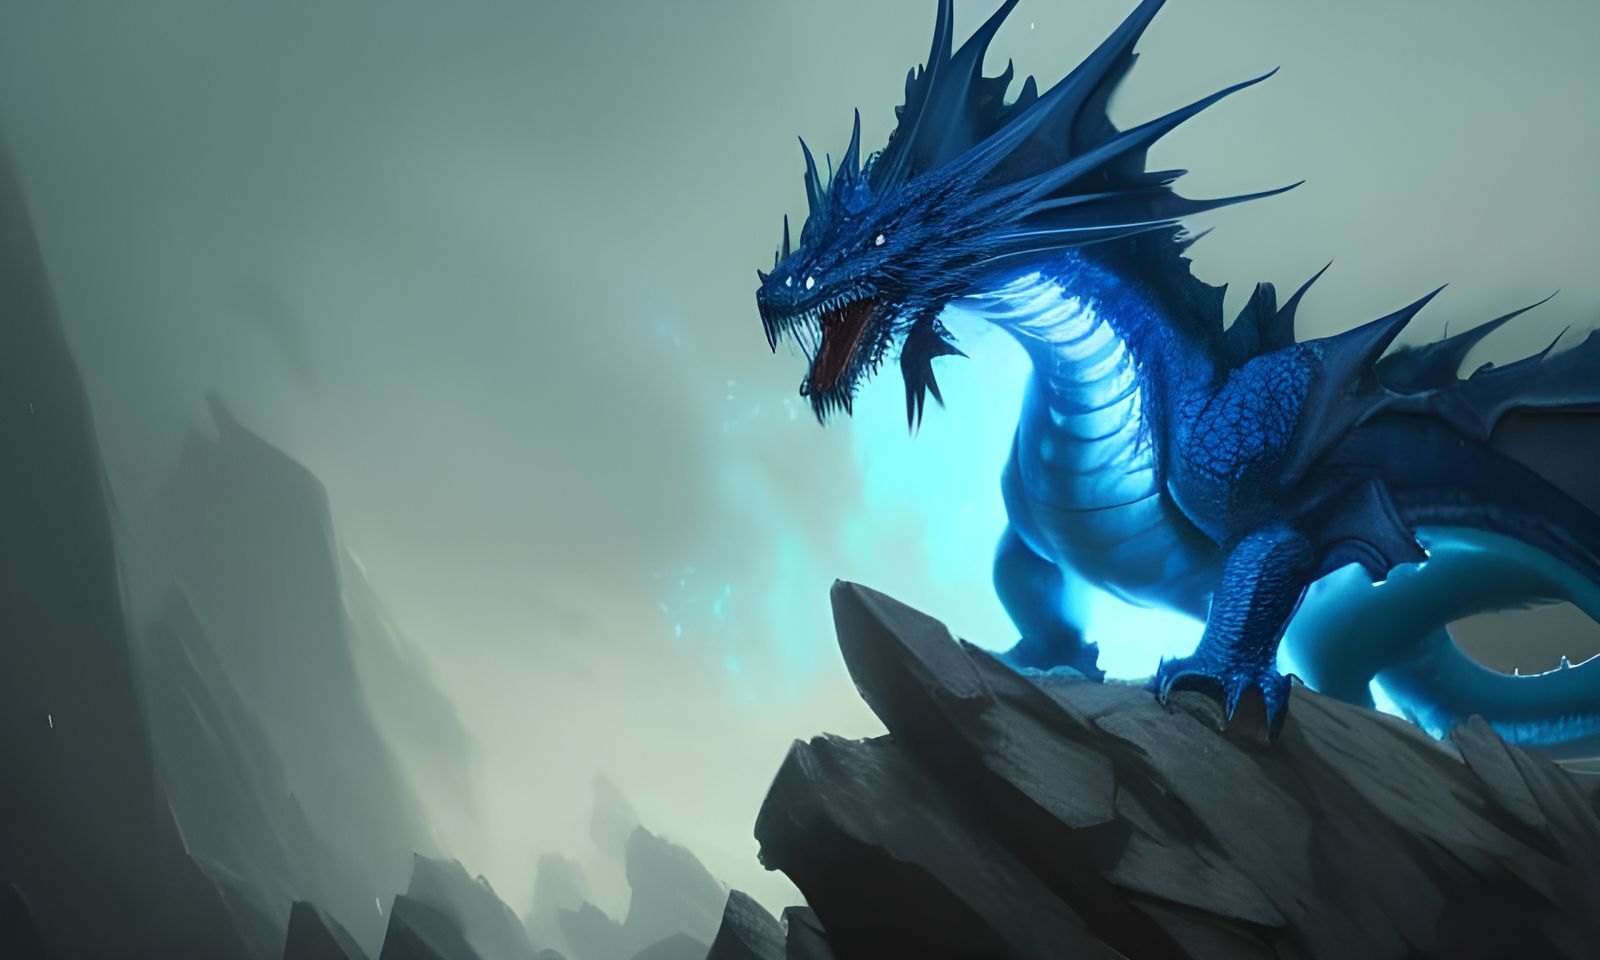 Roaring Blue Dragon - AI Generated Artwork - NightCafe Creator